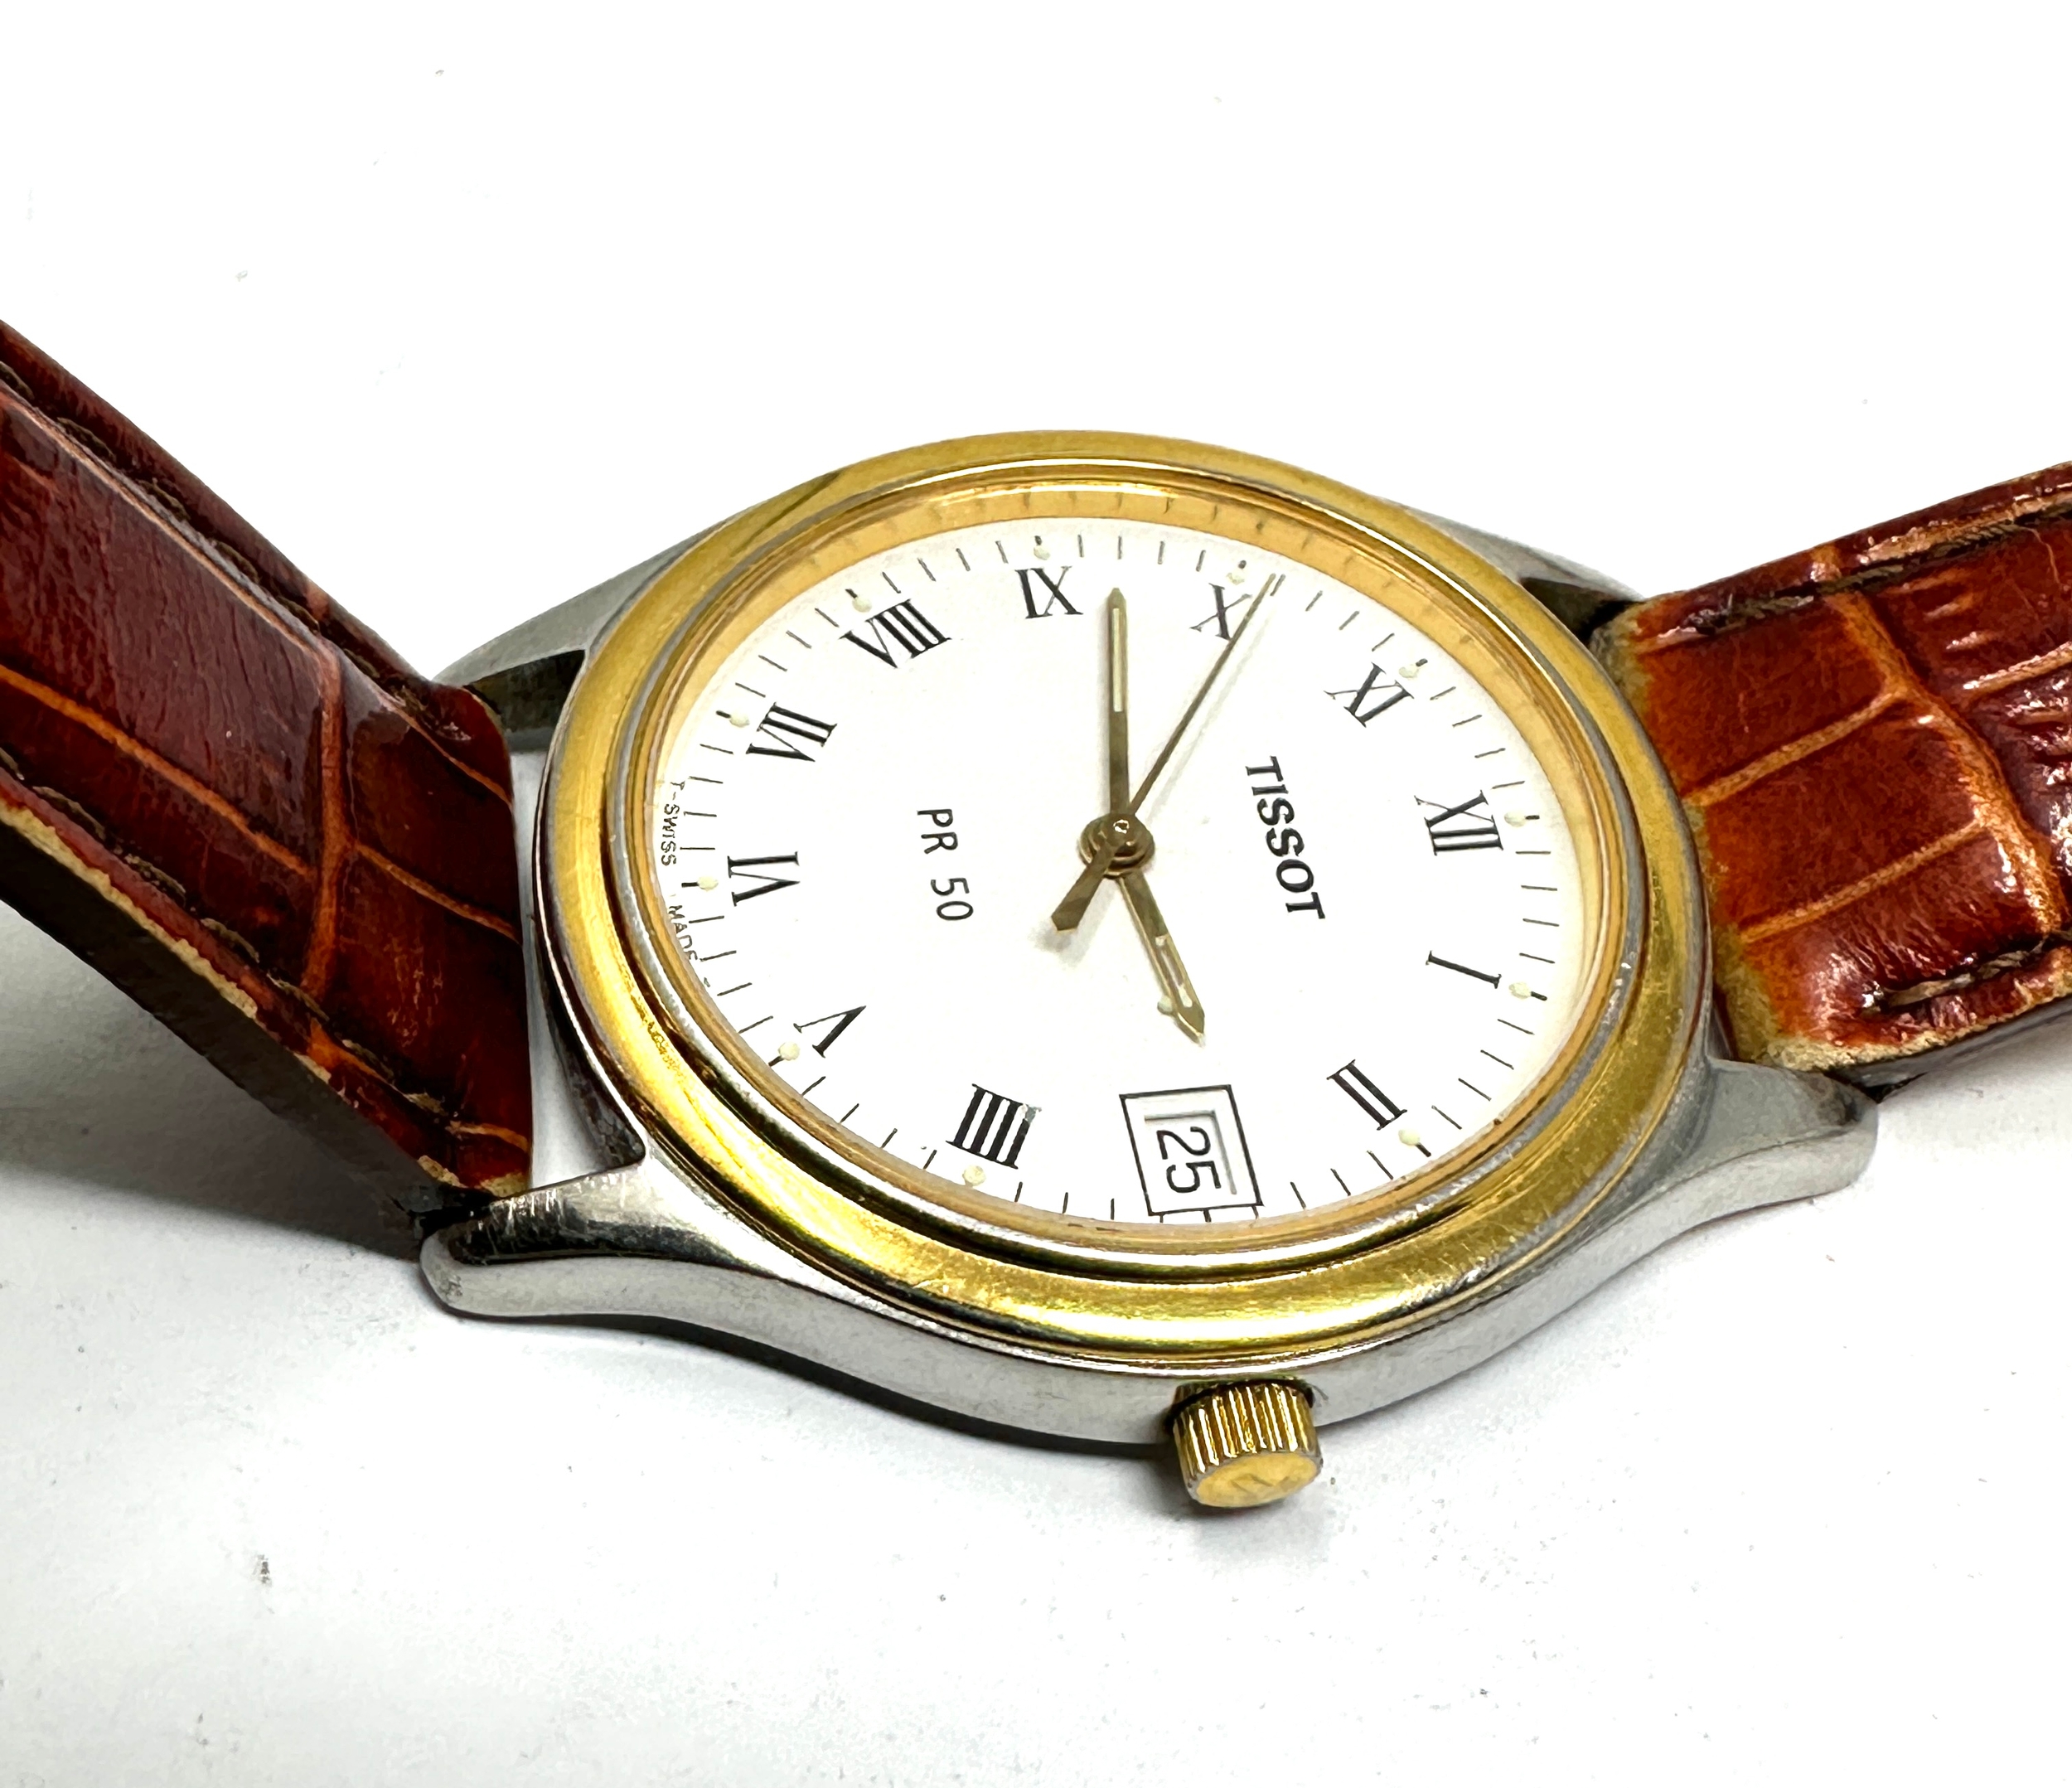 Gents quartz tissot pr 50 wristwatch the watch is ticking - Image 2 of 4